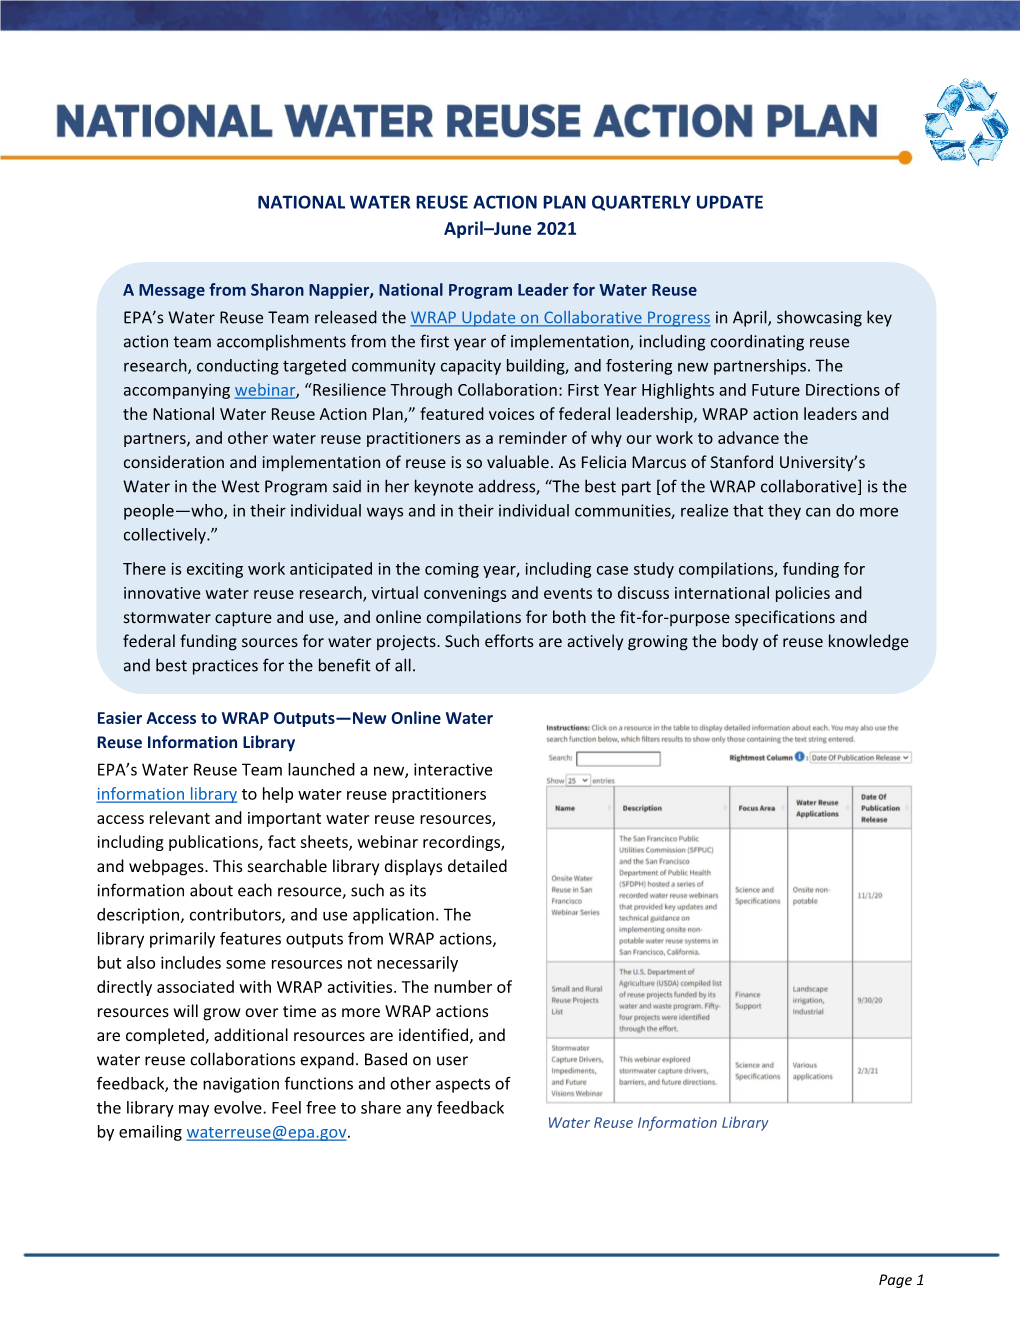 National Water Reuse Action Plan Quarterly Update (April-June 2021)